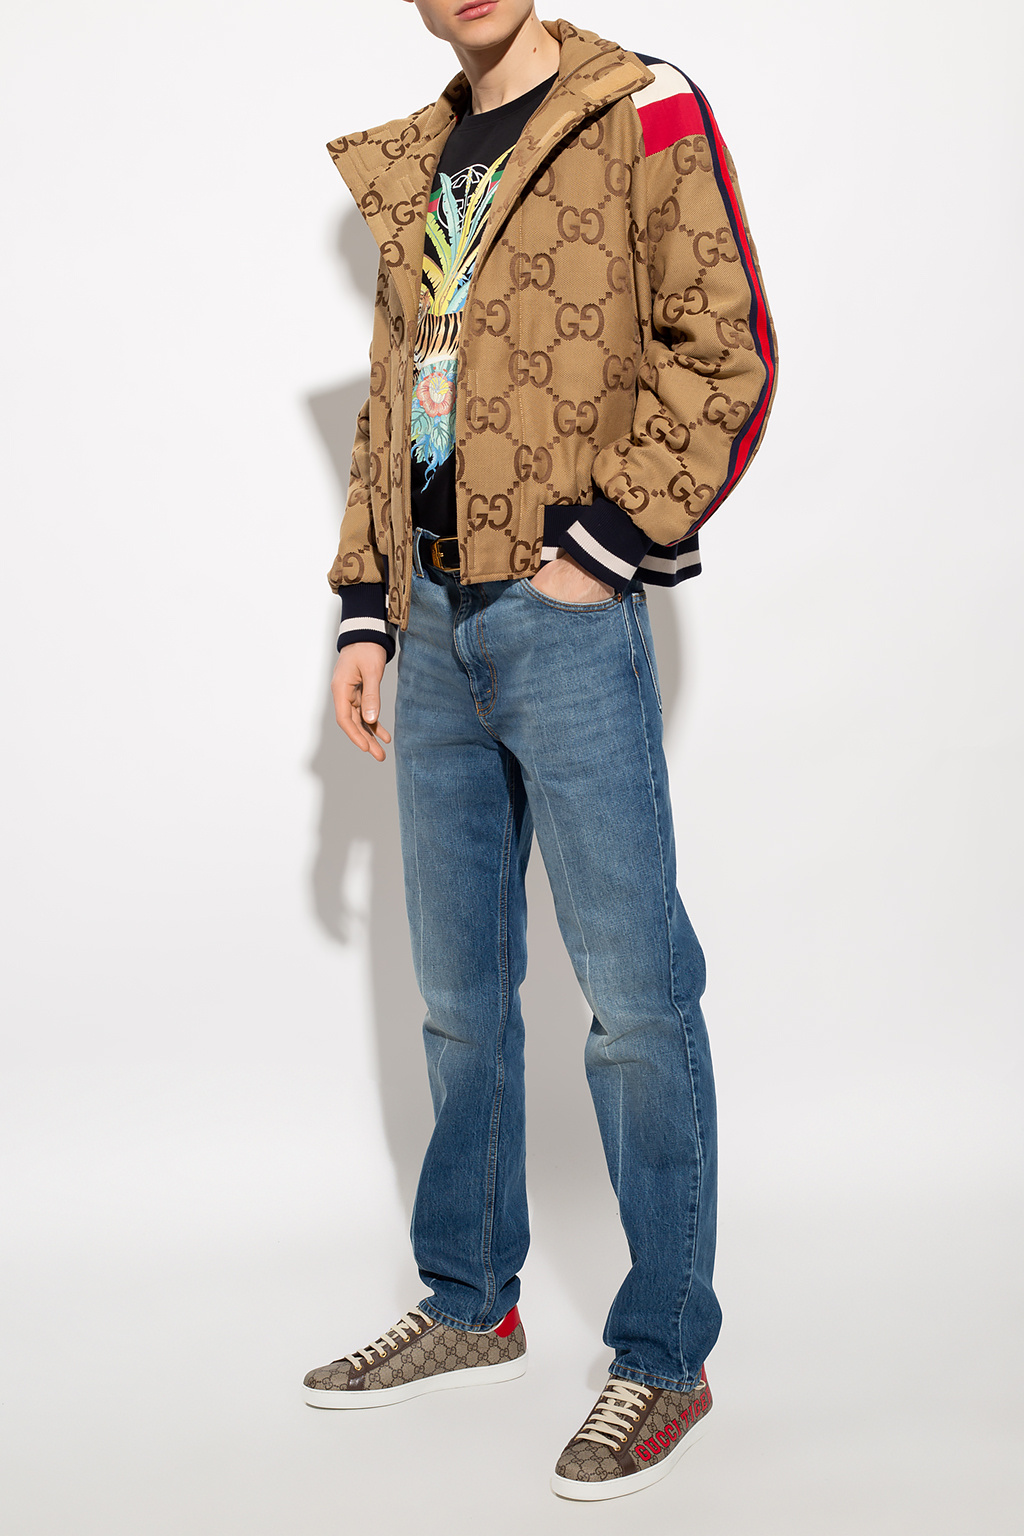 Gucci Lace Bomber Jacket